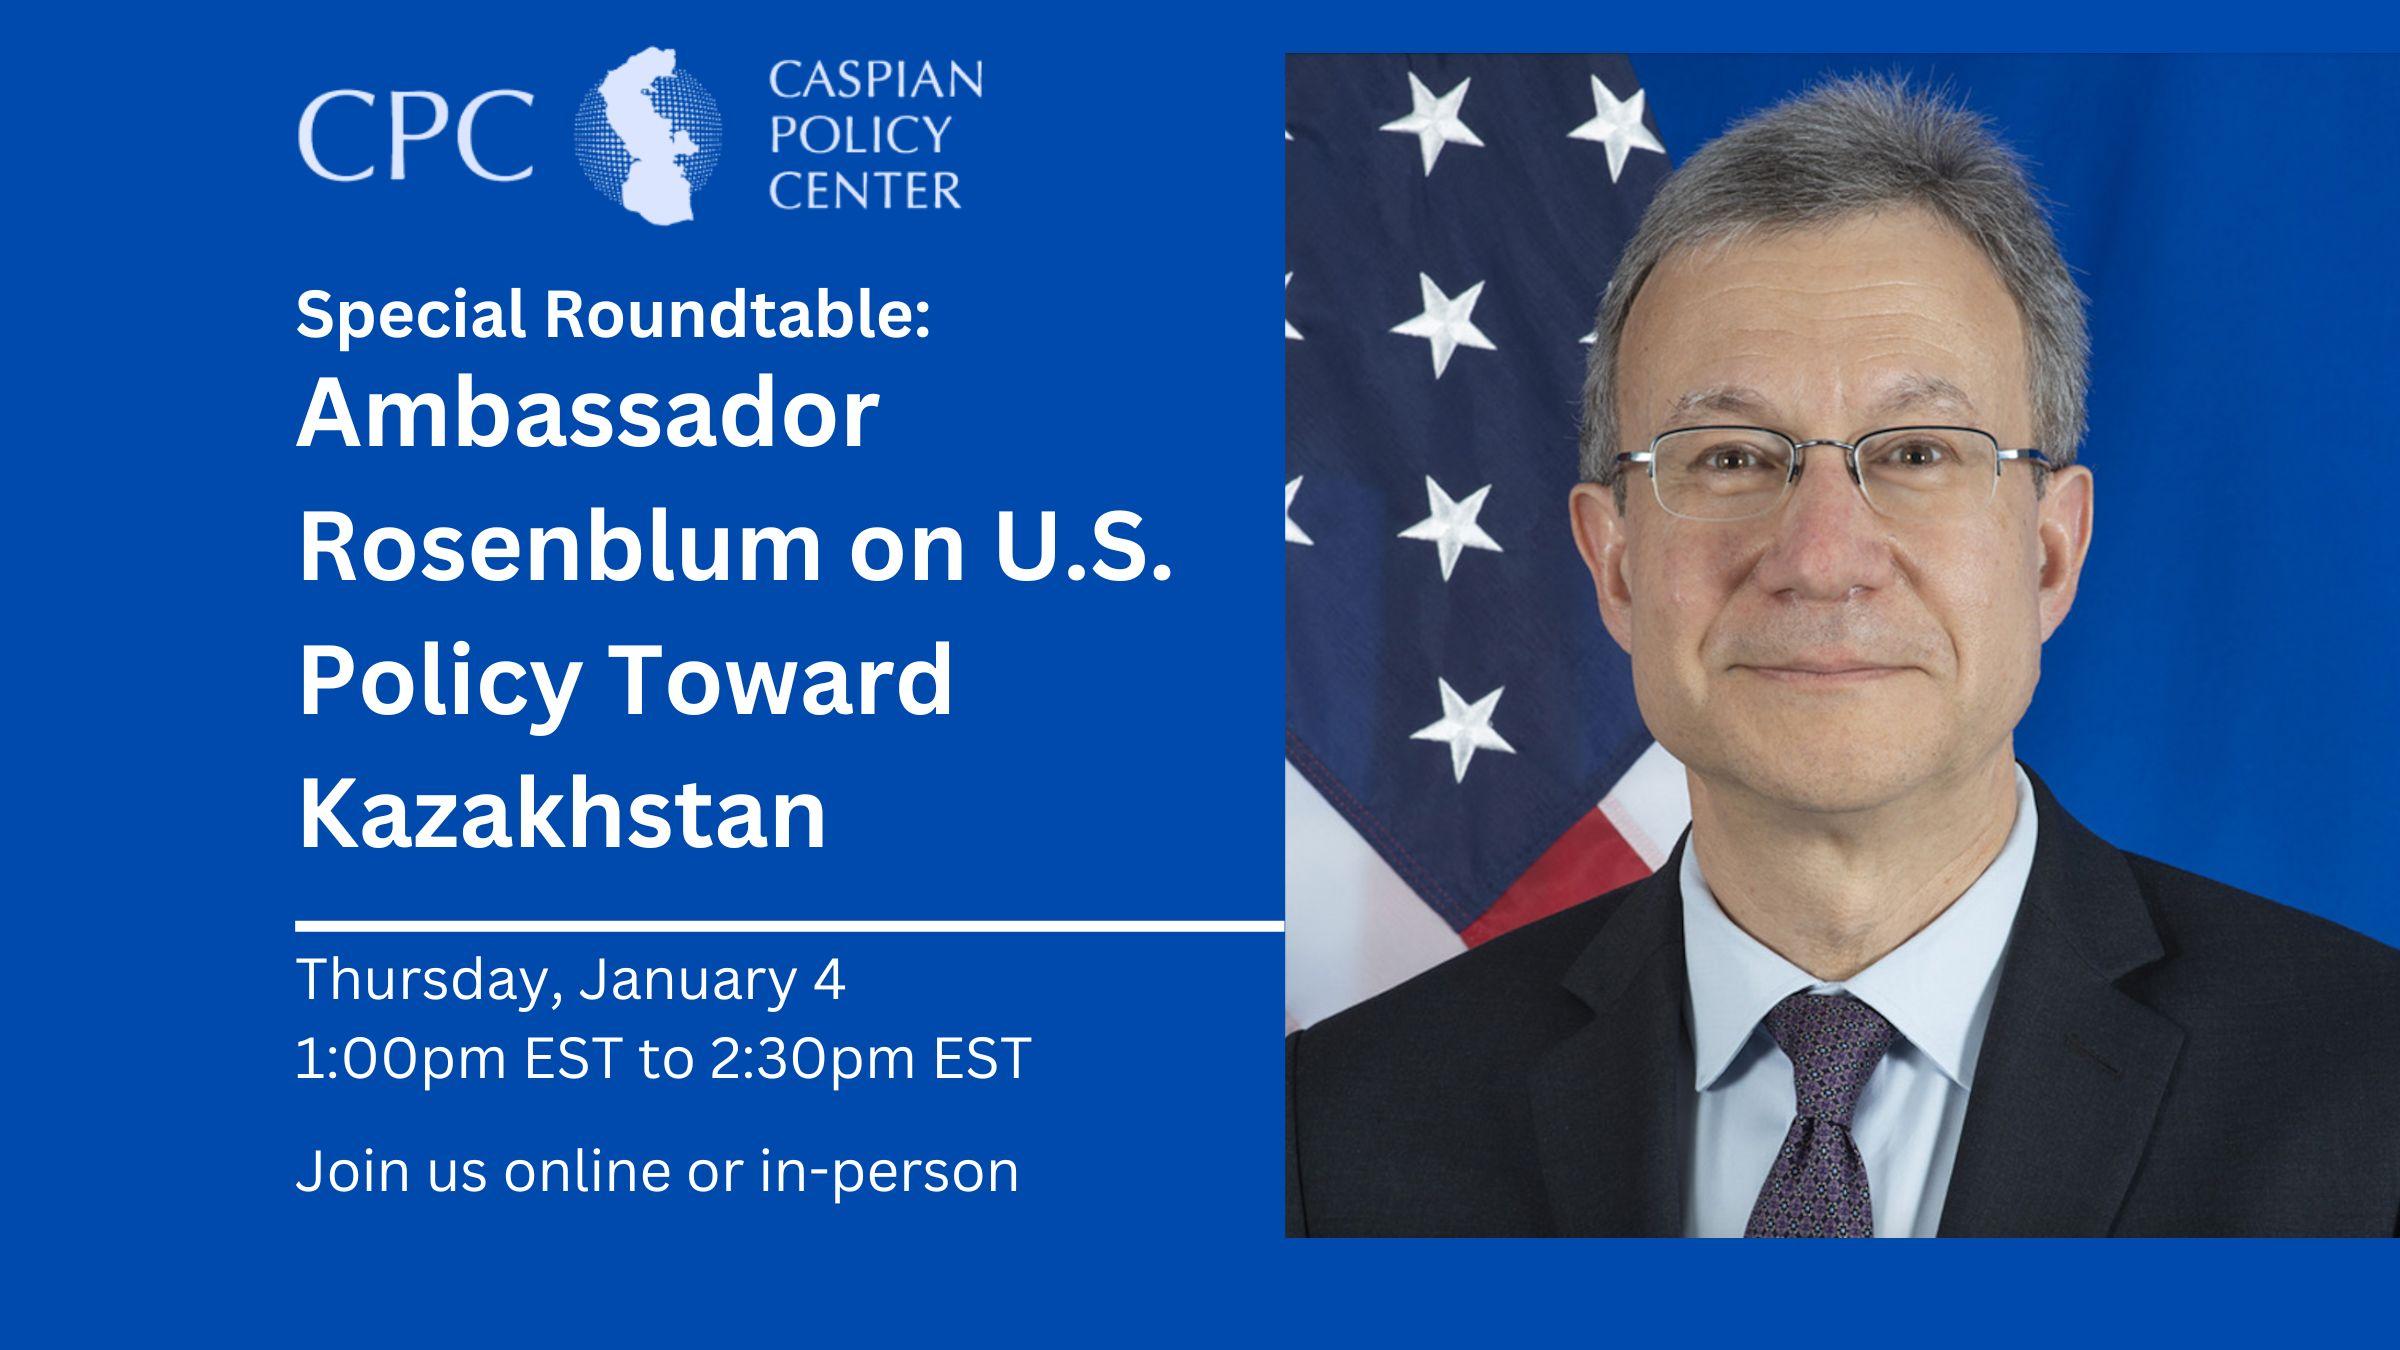 Special Roundtable: Ambassador Rosenblum on U.S. Policy Toward Kazakhstan